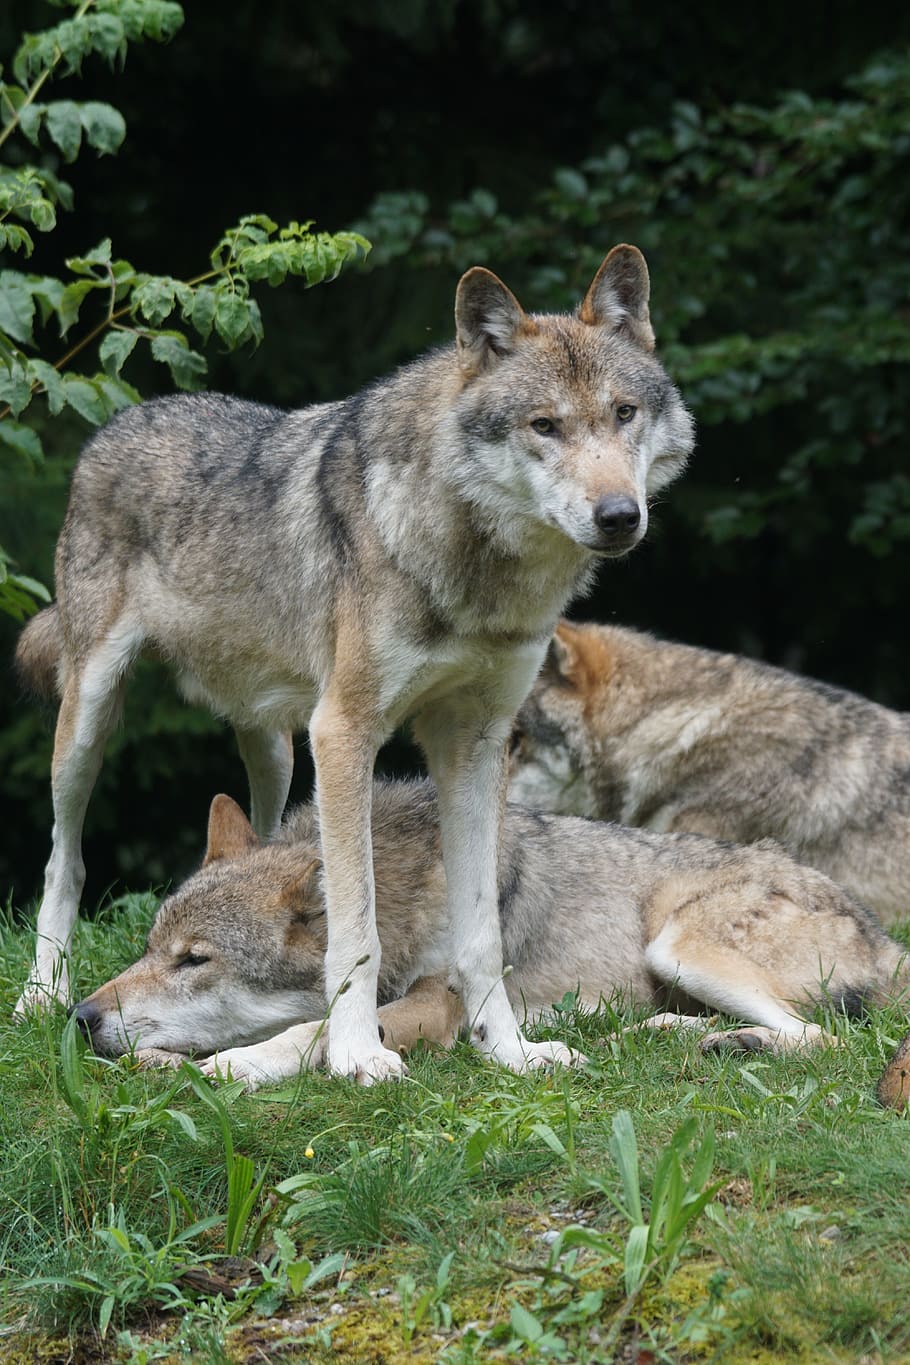 serigala, berdiri, hijau, bidang rumput, siang hari, predator, leitwolf, anjing alpha, dominan, bertahan hidup